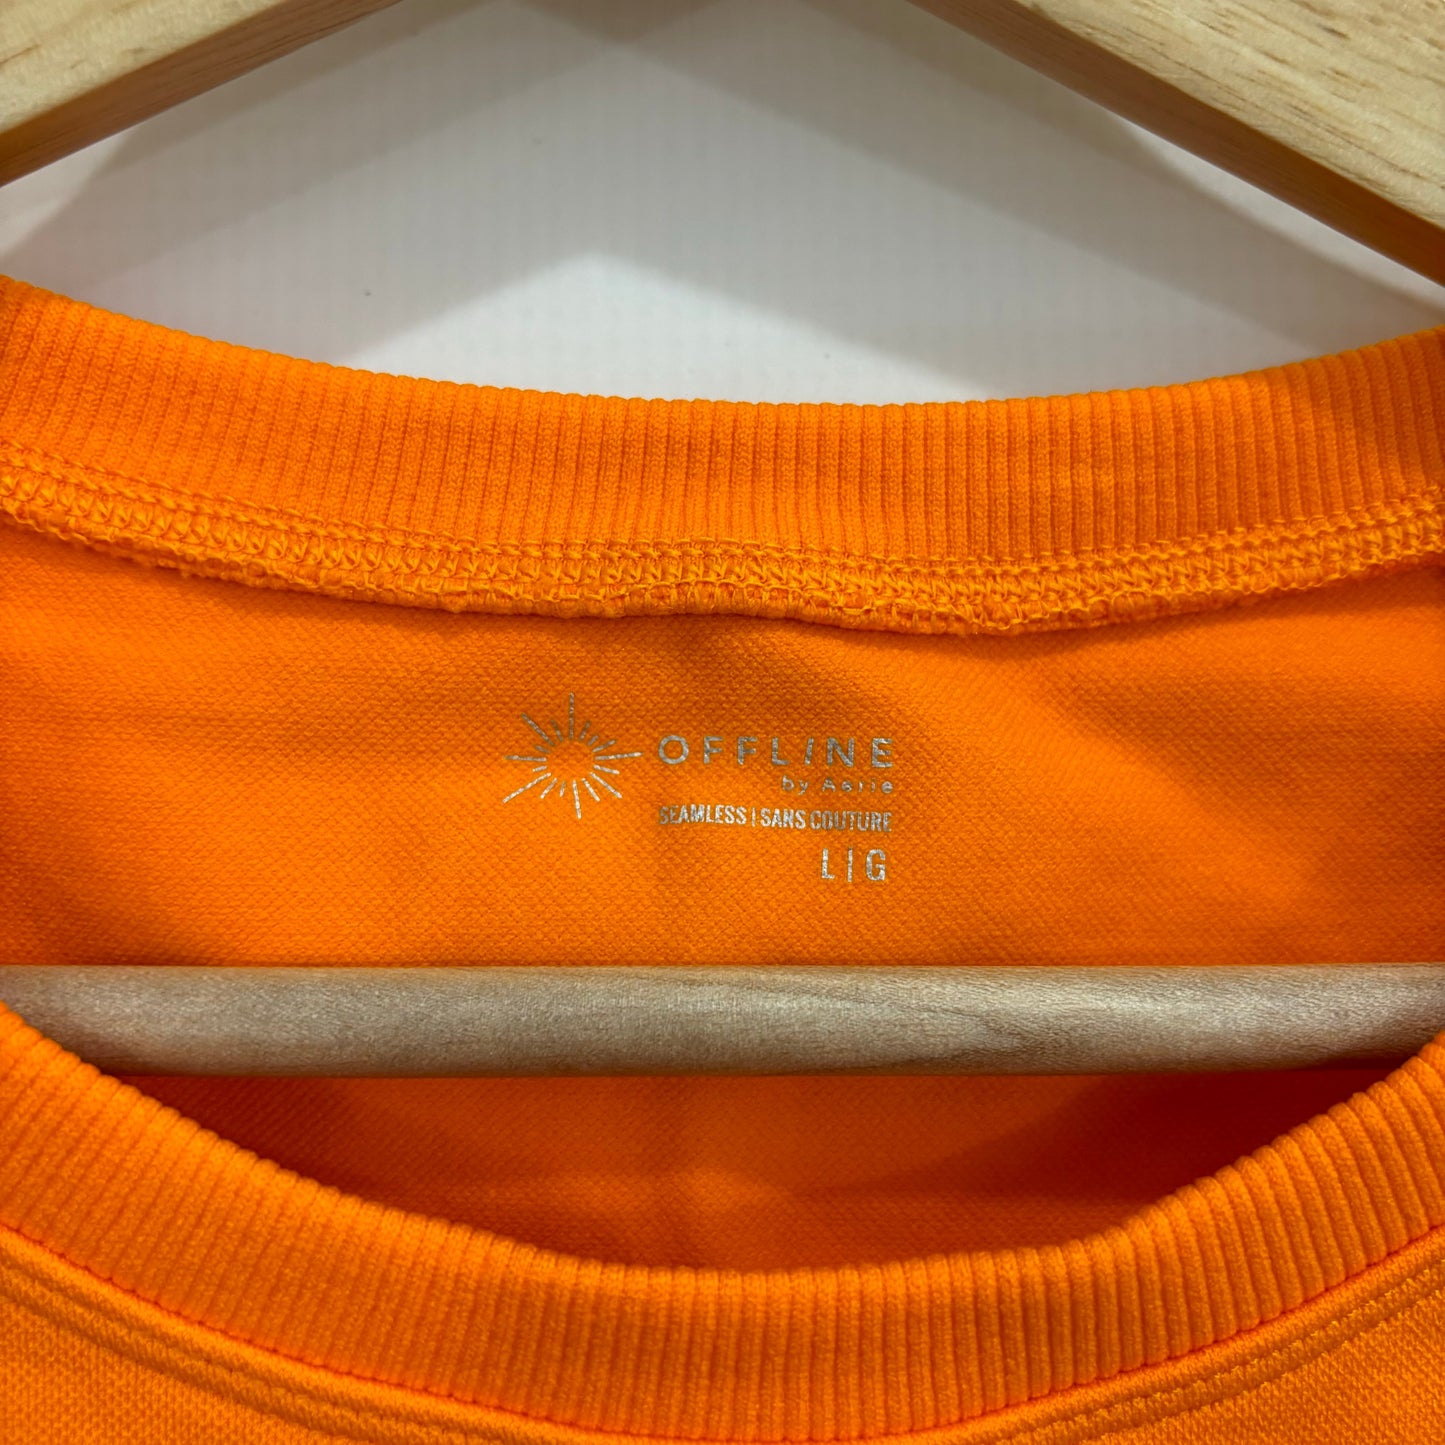 Orange Athletic Top Short Sleeve Aerie, Size L